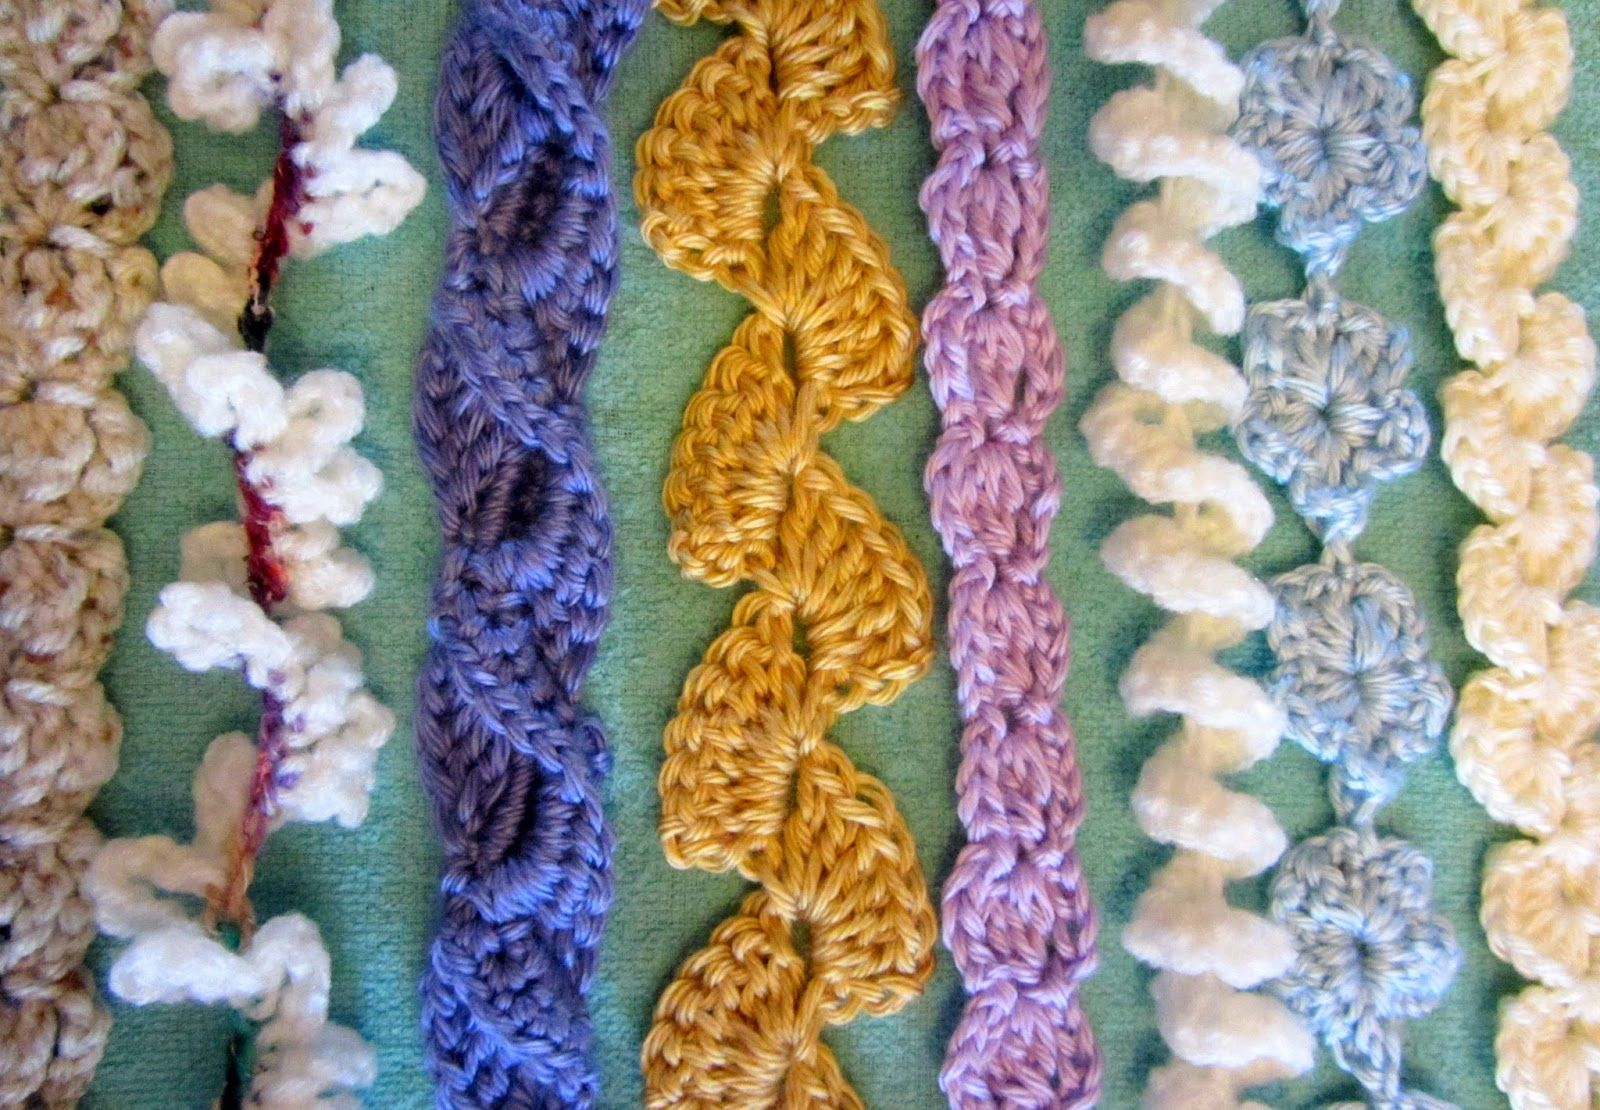 Lanyard Crochet Pattern Crocheted Cords For Lanyards Crochet Pinte